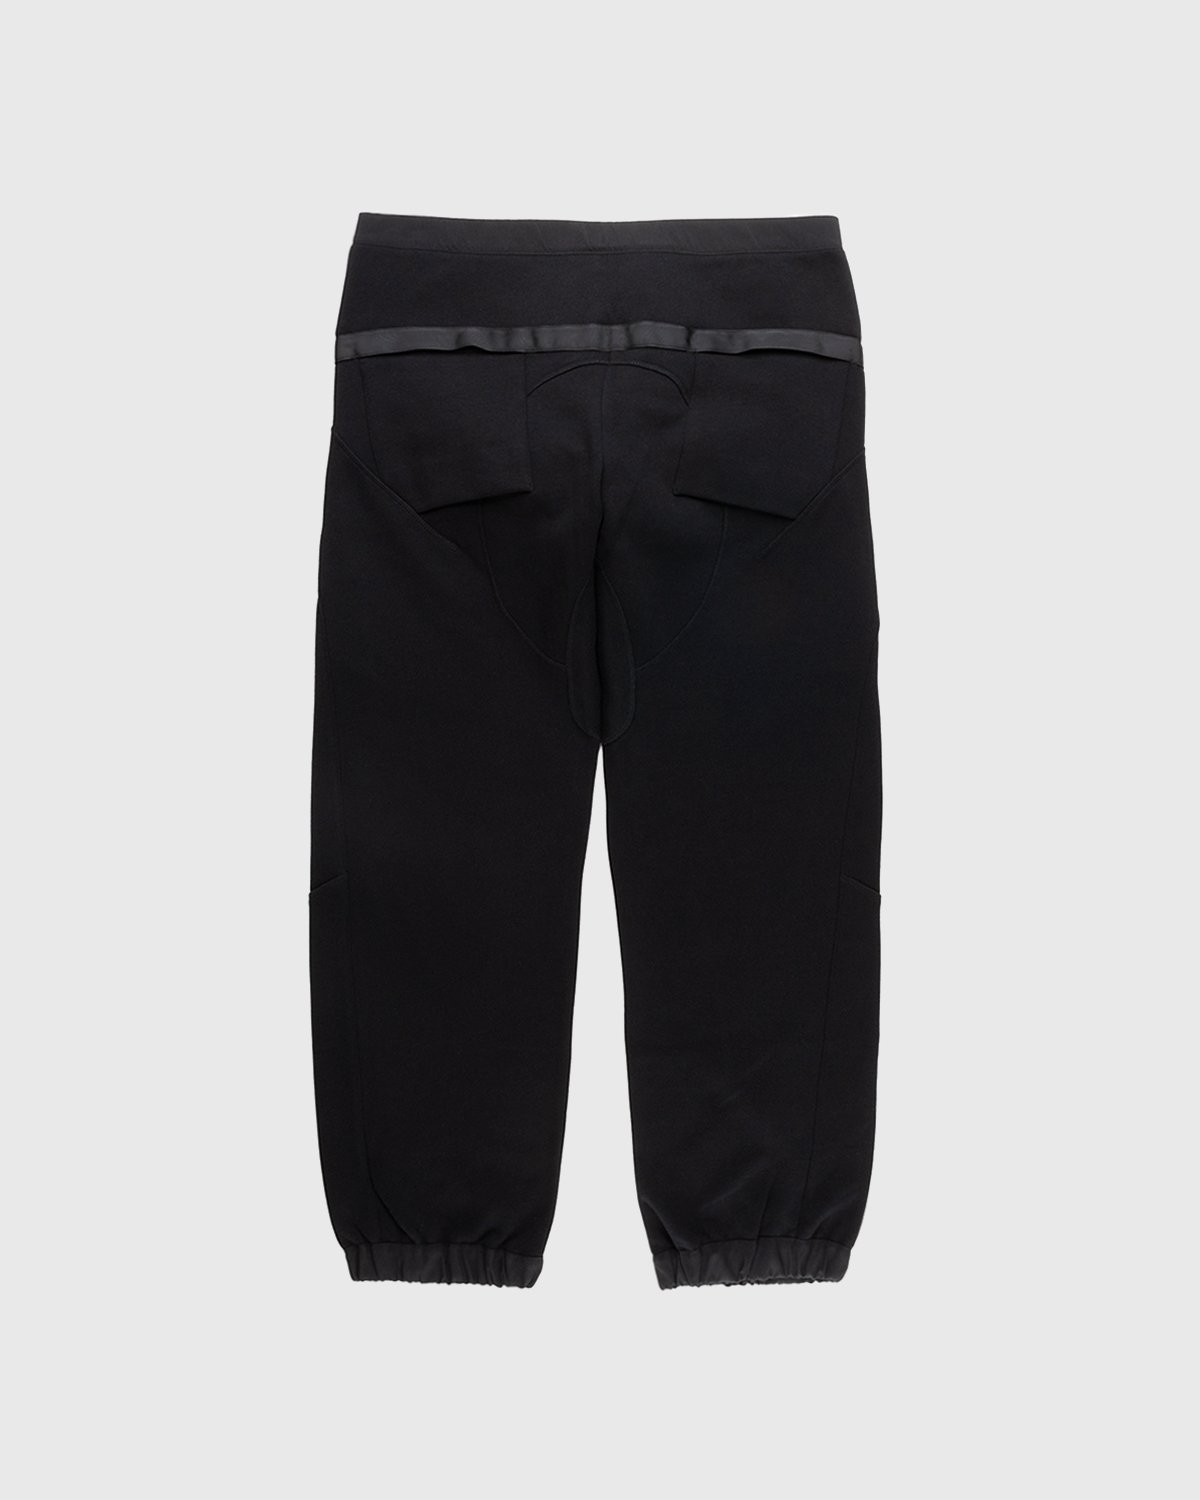 ACRONYM – P39-PR Pants Black | Highsnobiety Shop